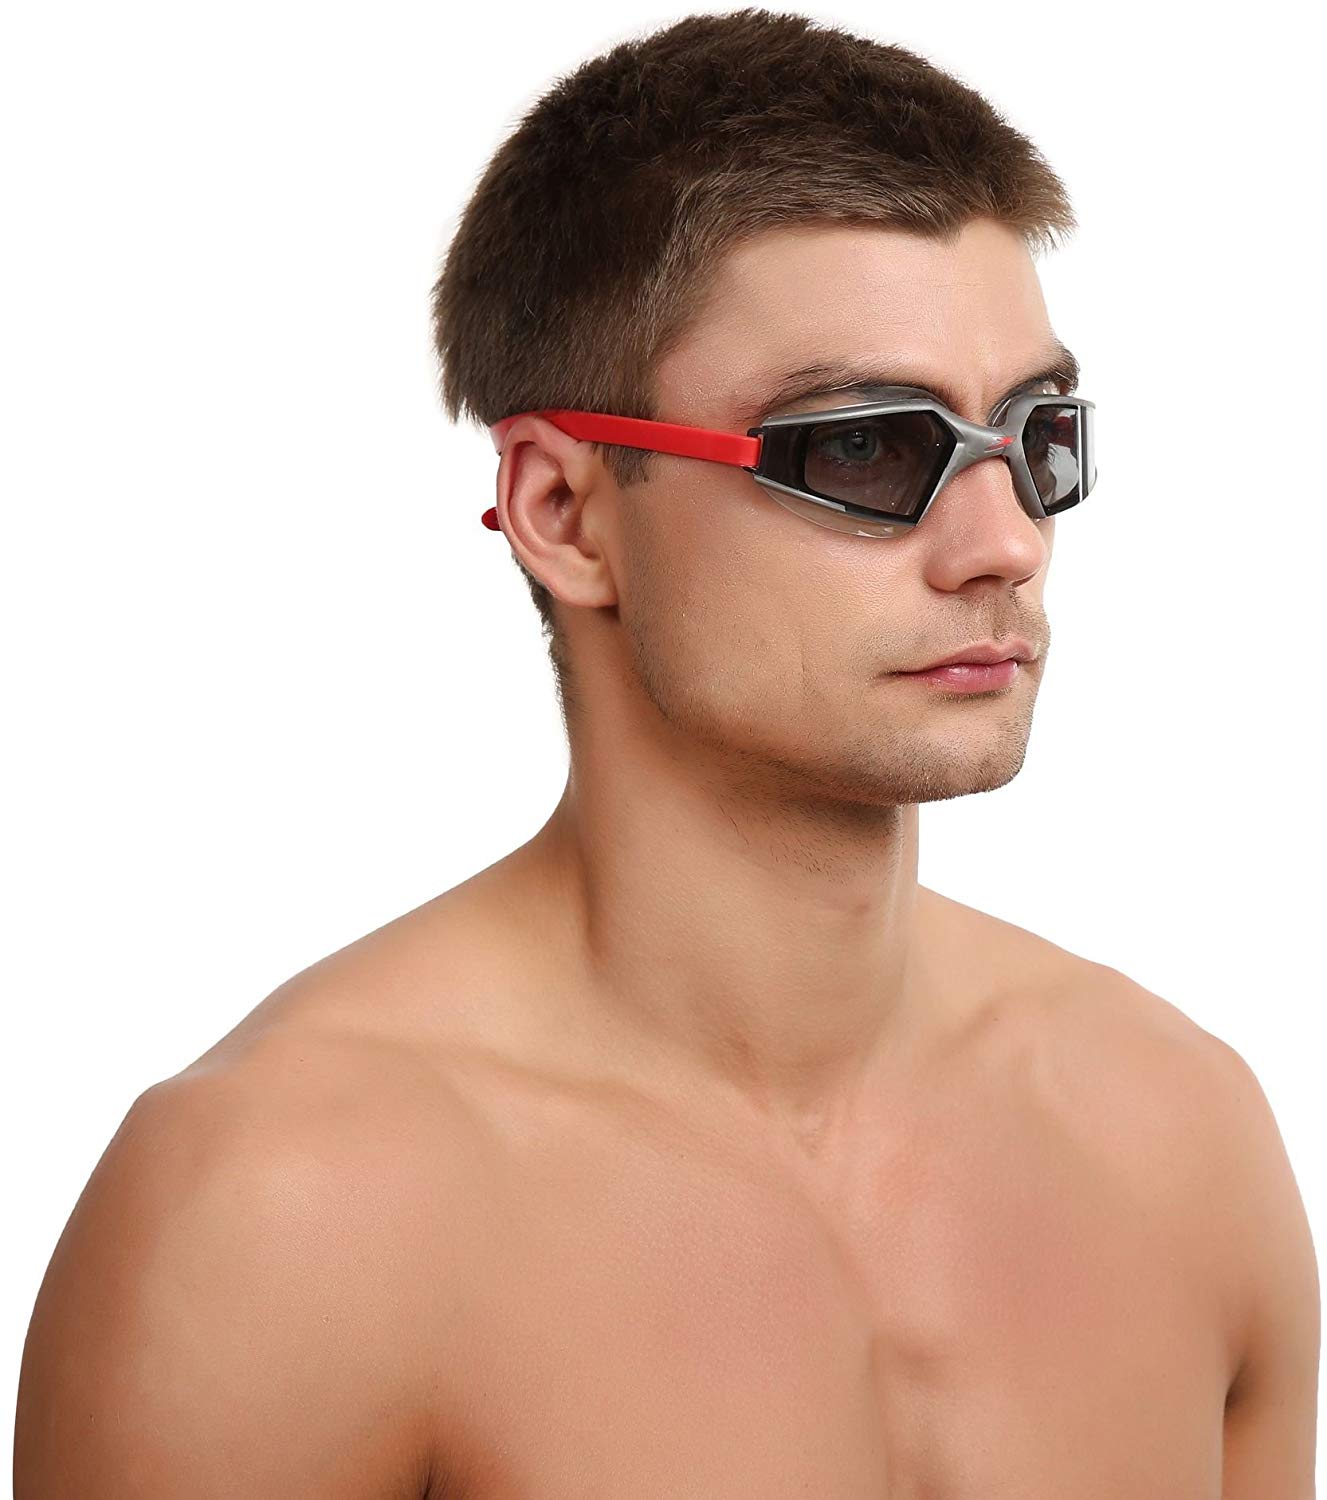 Speedo Unisex-Adult Aquapulse Max 2 Goggles - Best Price online Prokicksports.com